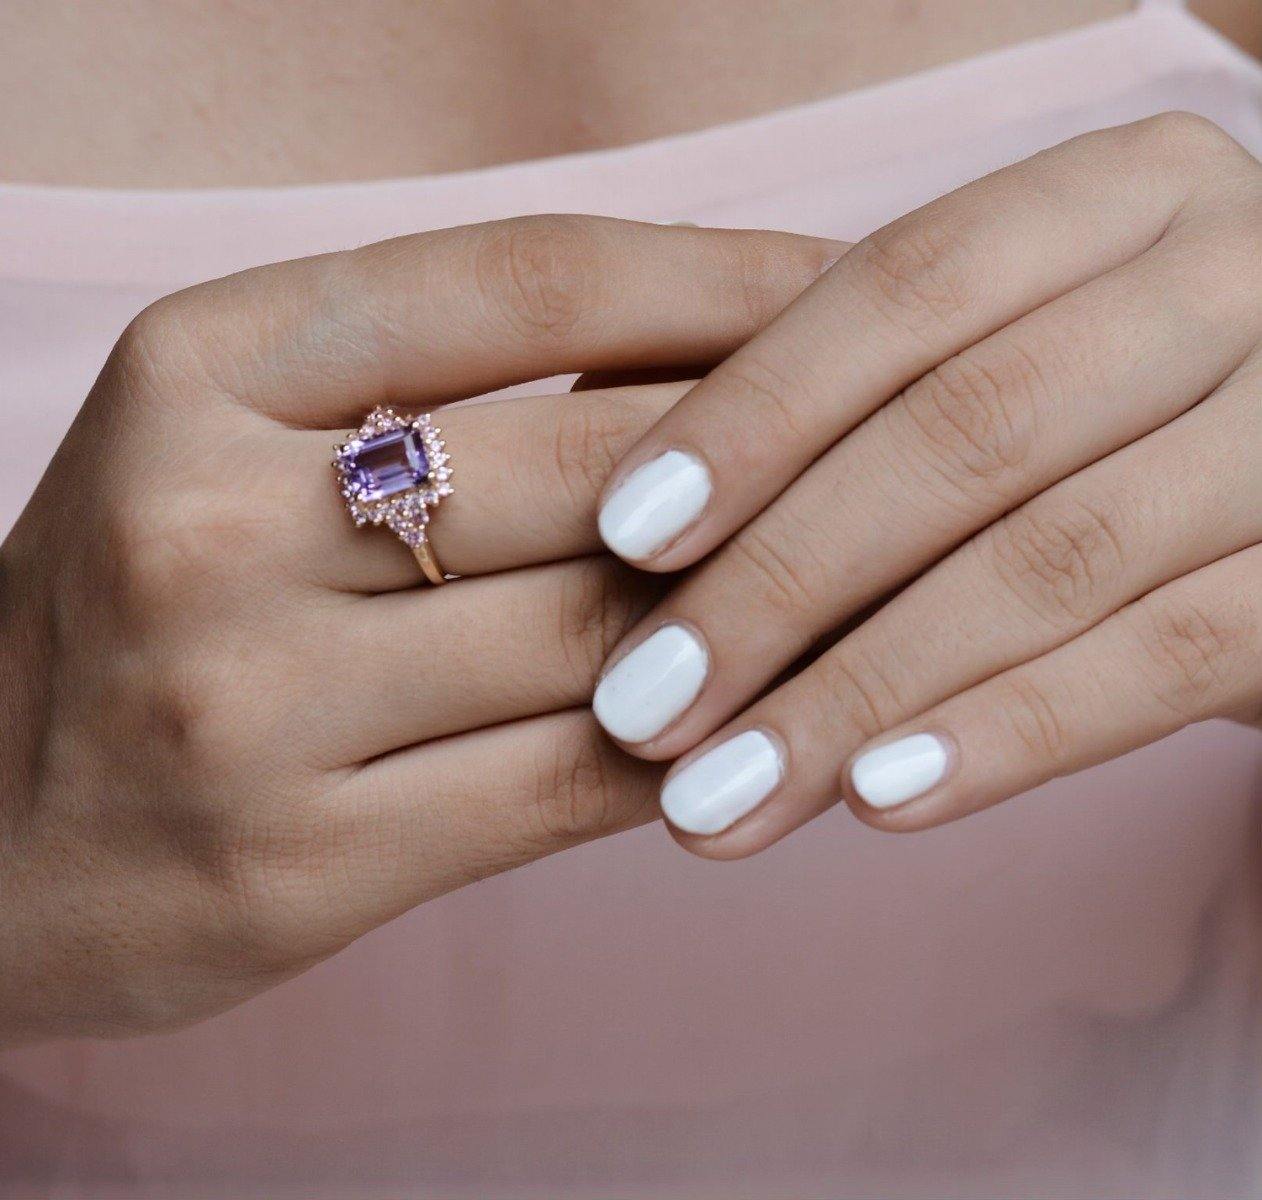 2.78 Ct. Pink Amethyst Sapphire Solid 14k Yellow Gold Ring Jewelry - YoTreasure